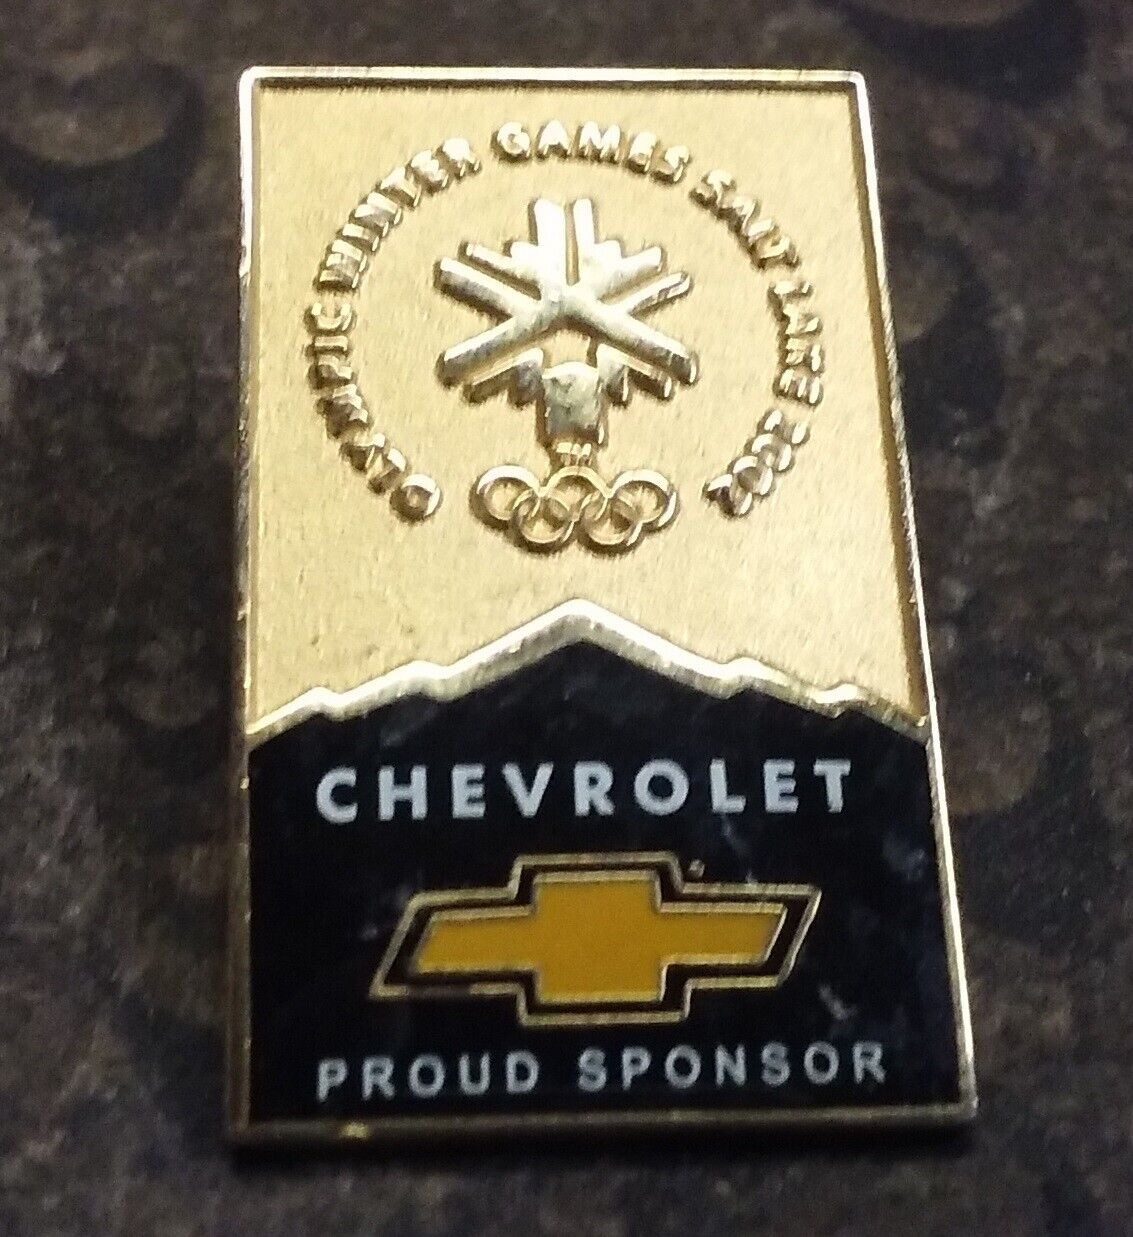 2002 Chevrolet Olympic Winter Games Salt Lake City pin badge Proud Sponsor